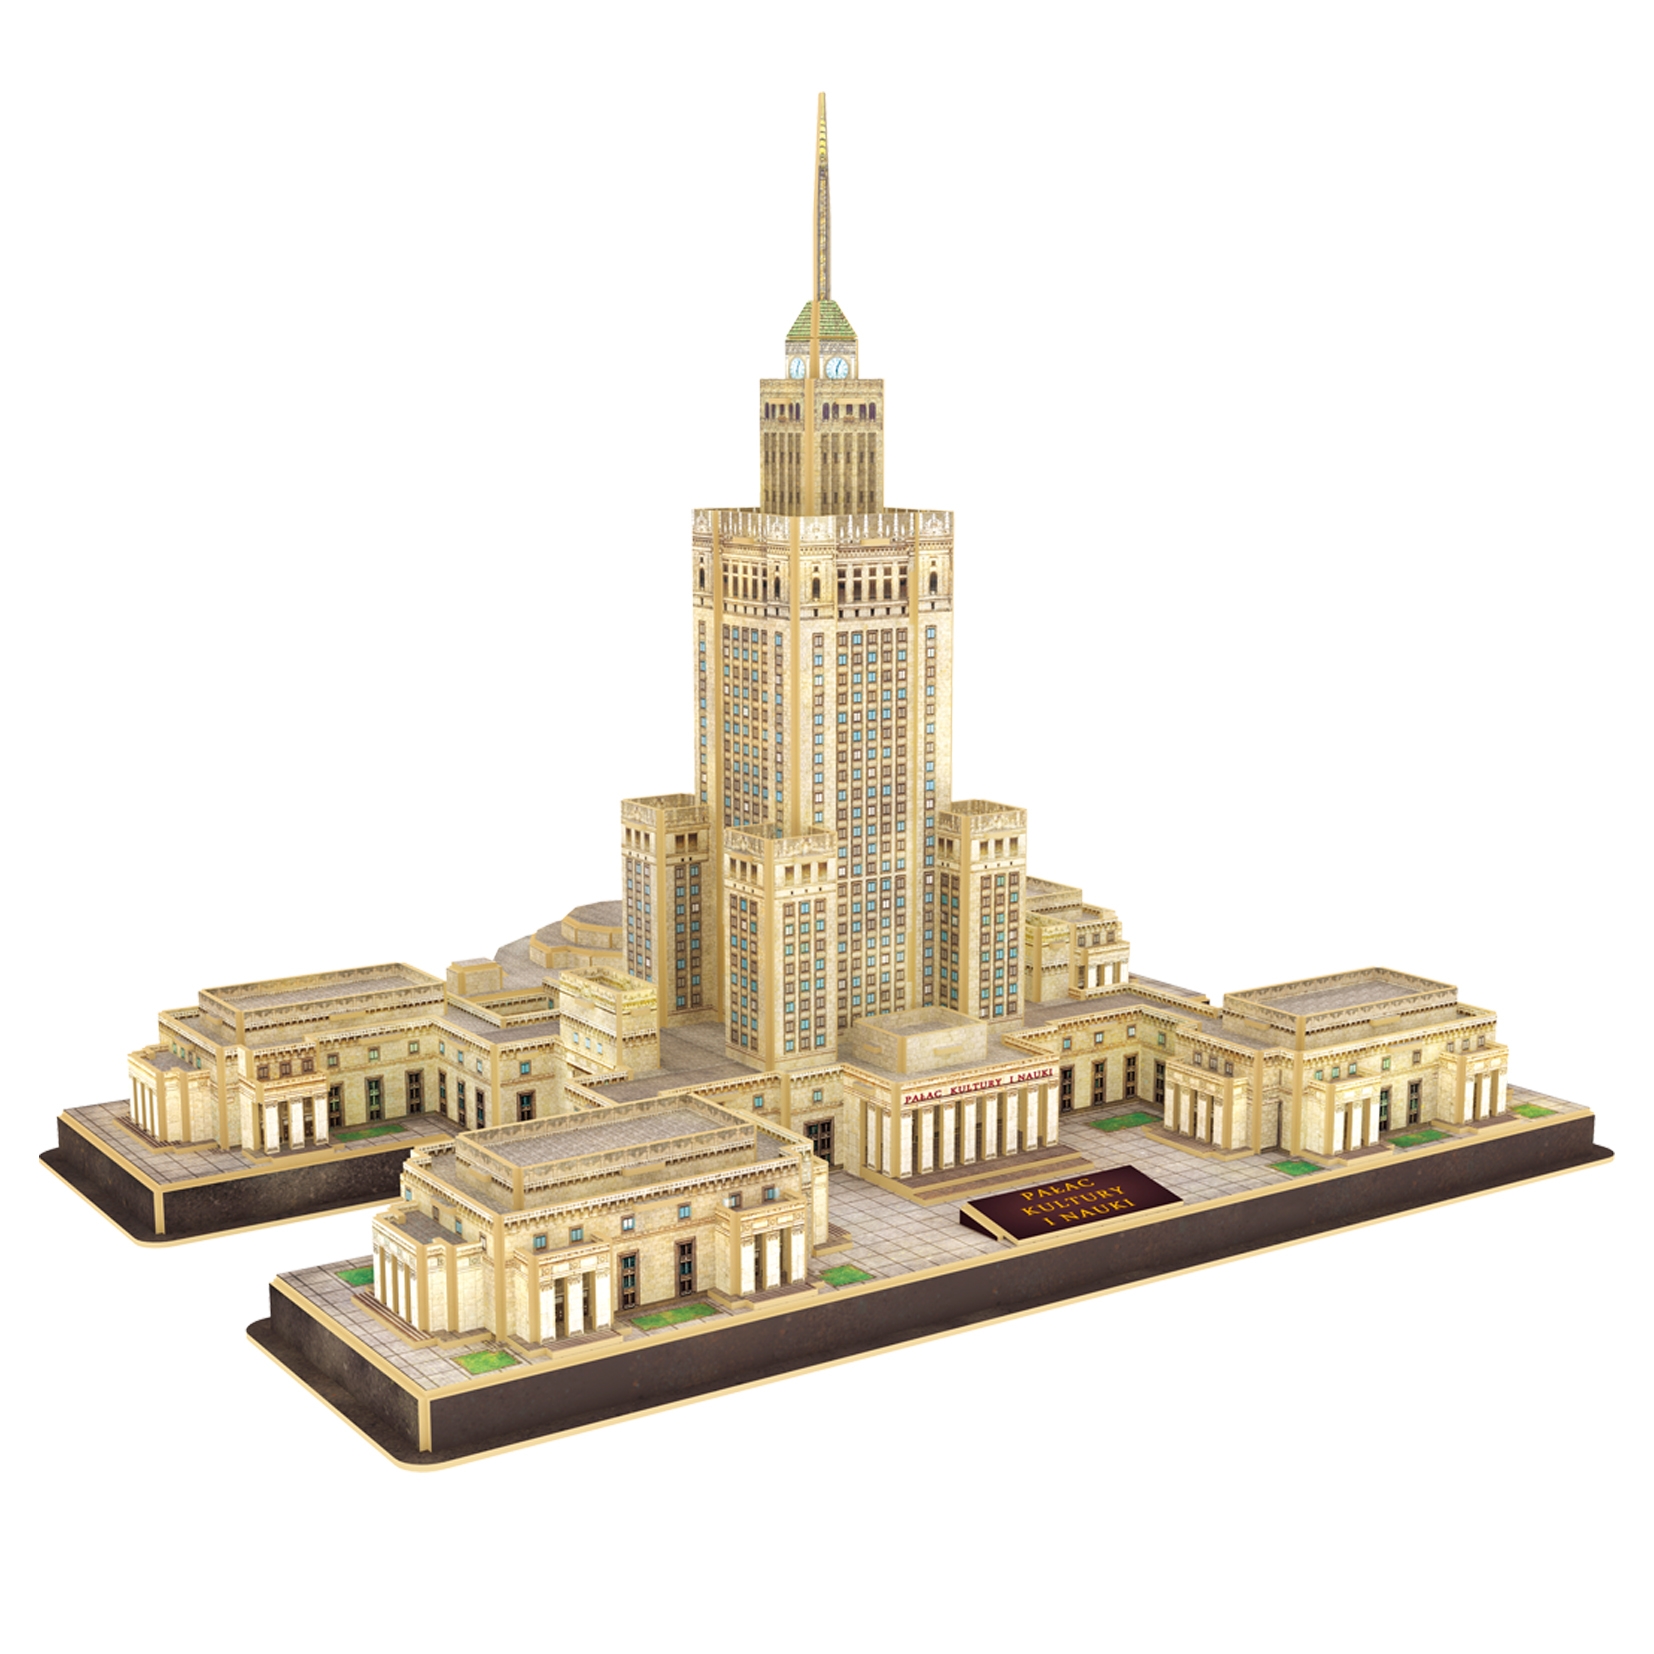 Puzzle 3D: Pałac Kultury i Nauki - zestaw XL (306-20224)